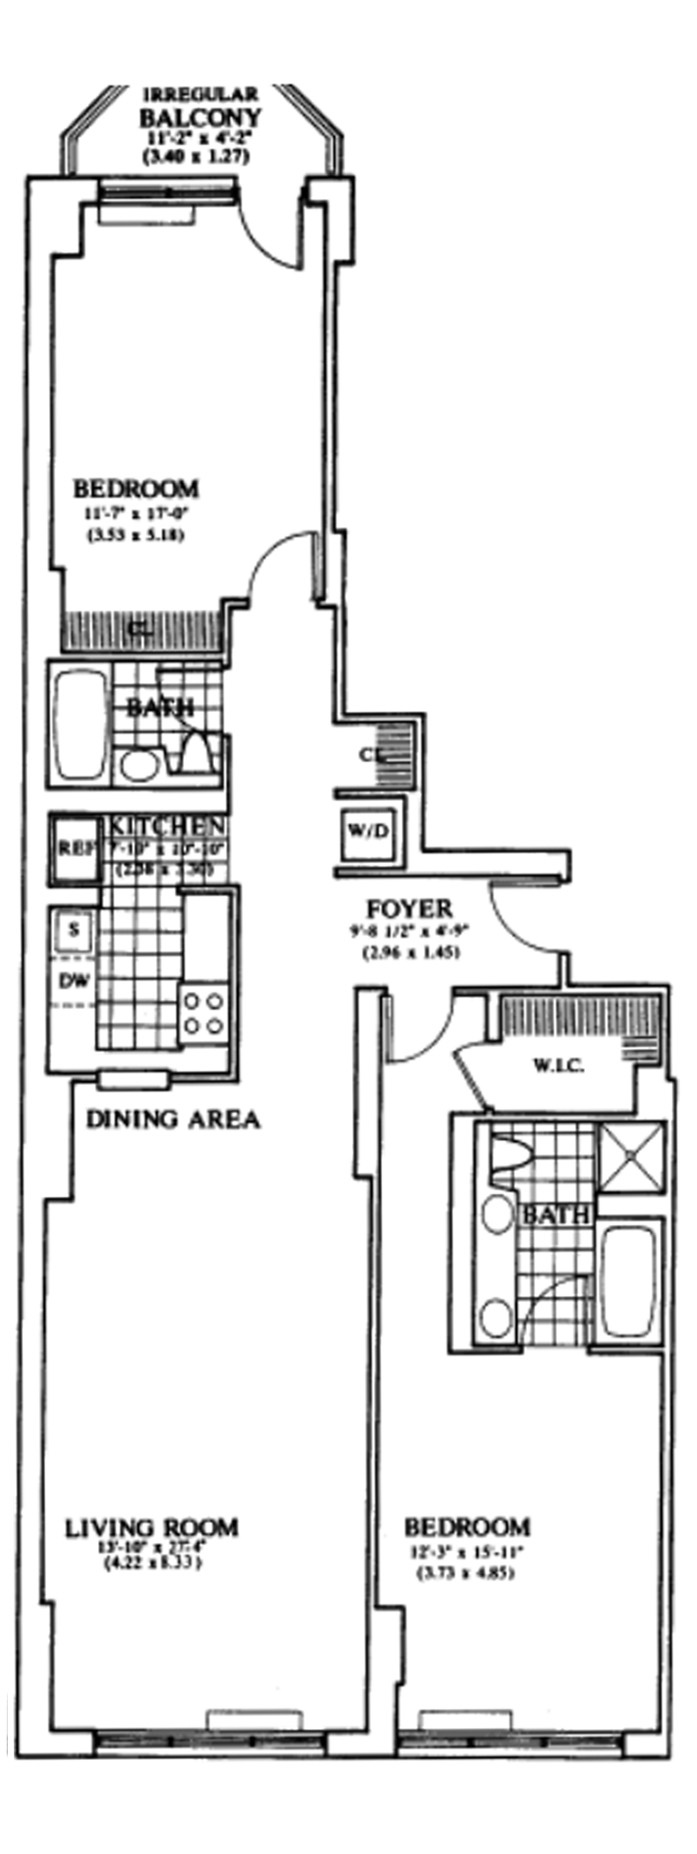 Floorplan for 201 West 72nd Street